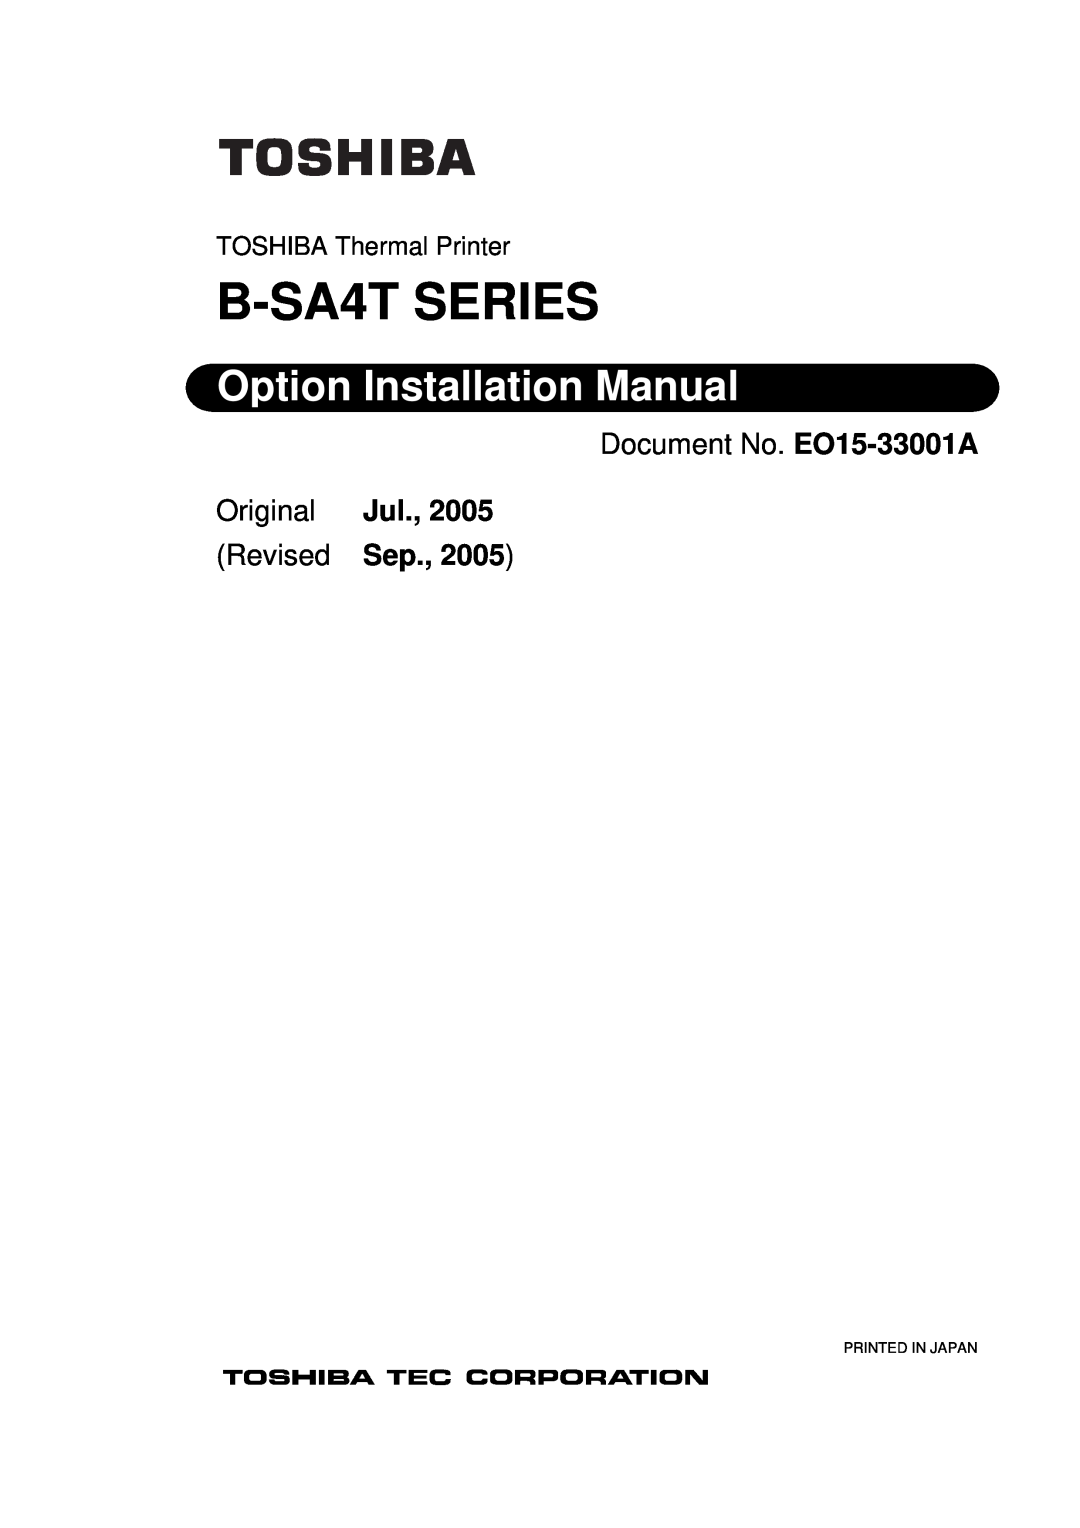 Toshiba installation manual B-SA4T SERIES, Option Installation Manual, Document No. EO15-33001A, Original Jul 